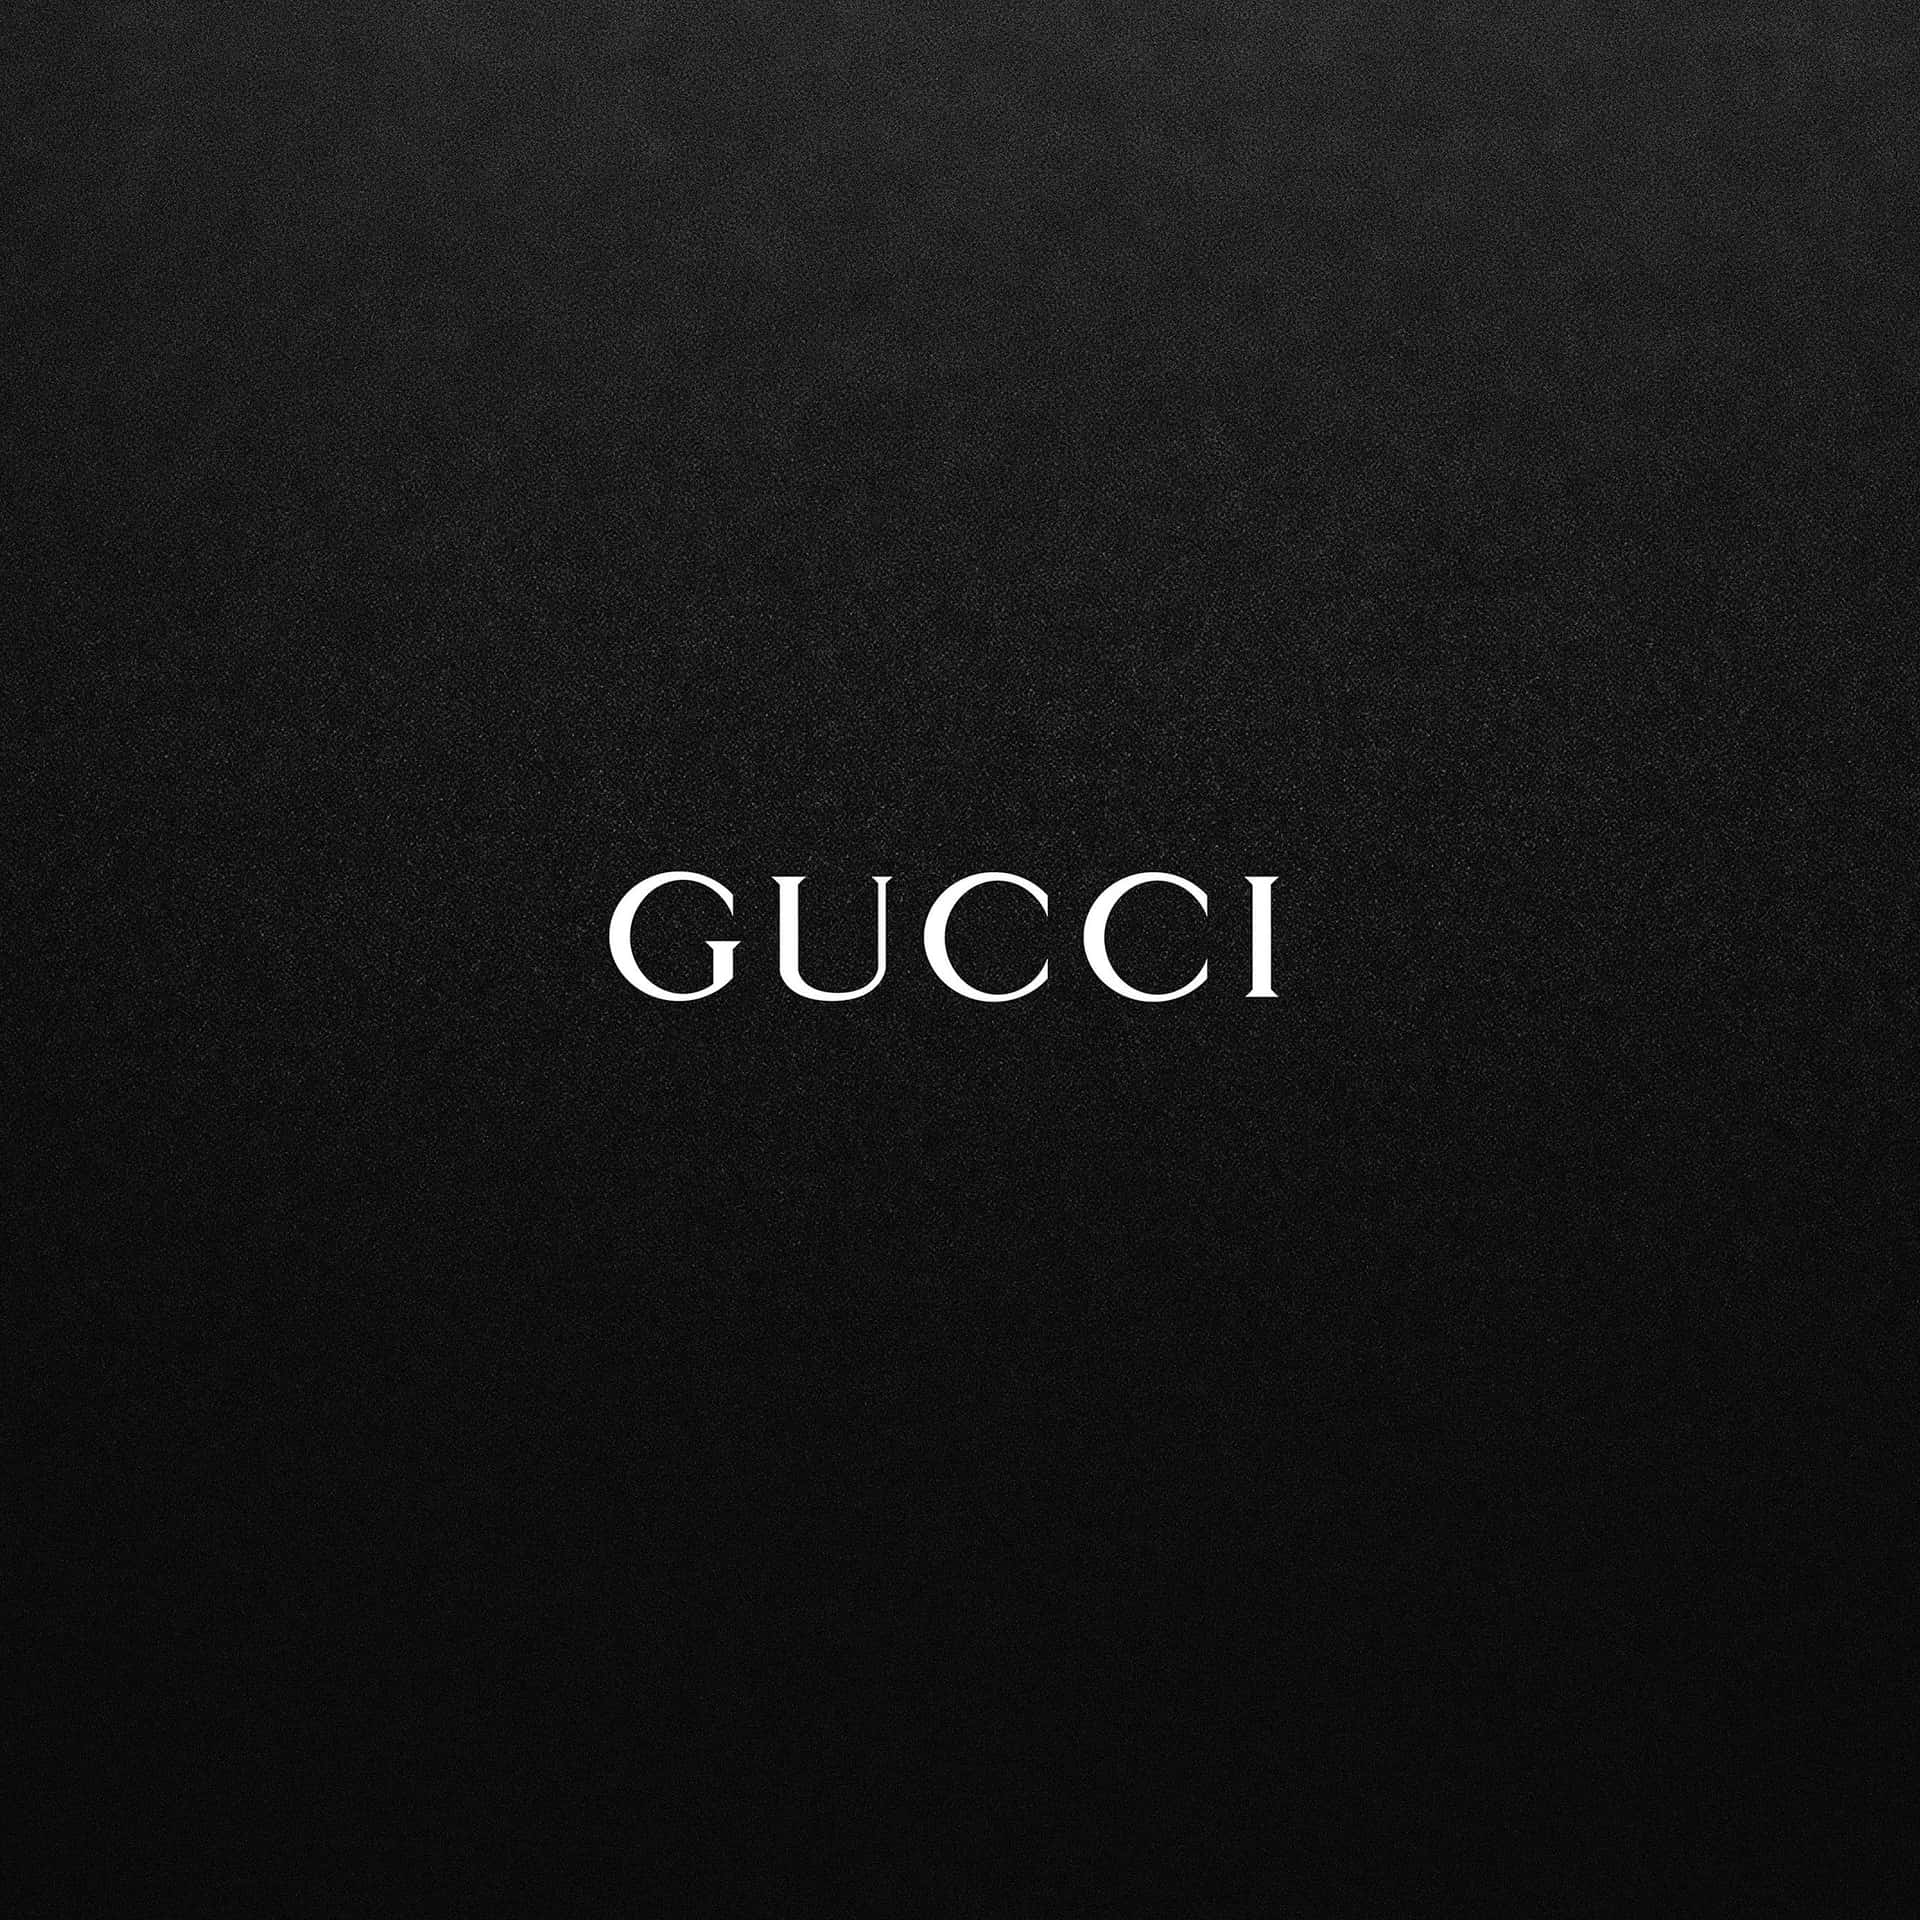 Enkeltvitt Gucci-textbakgrund